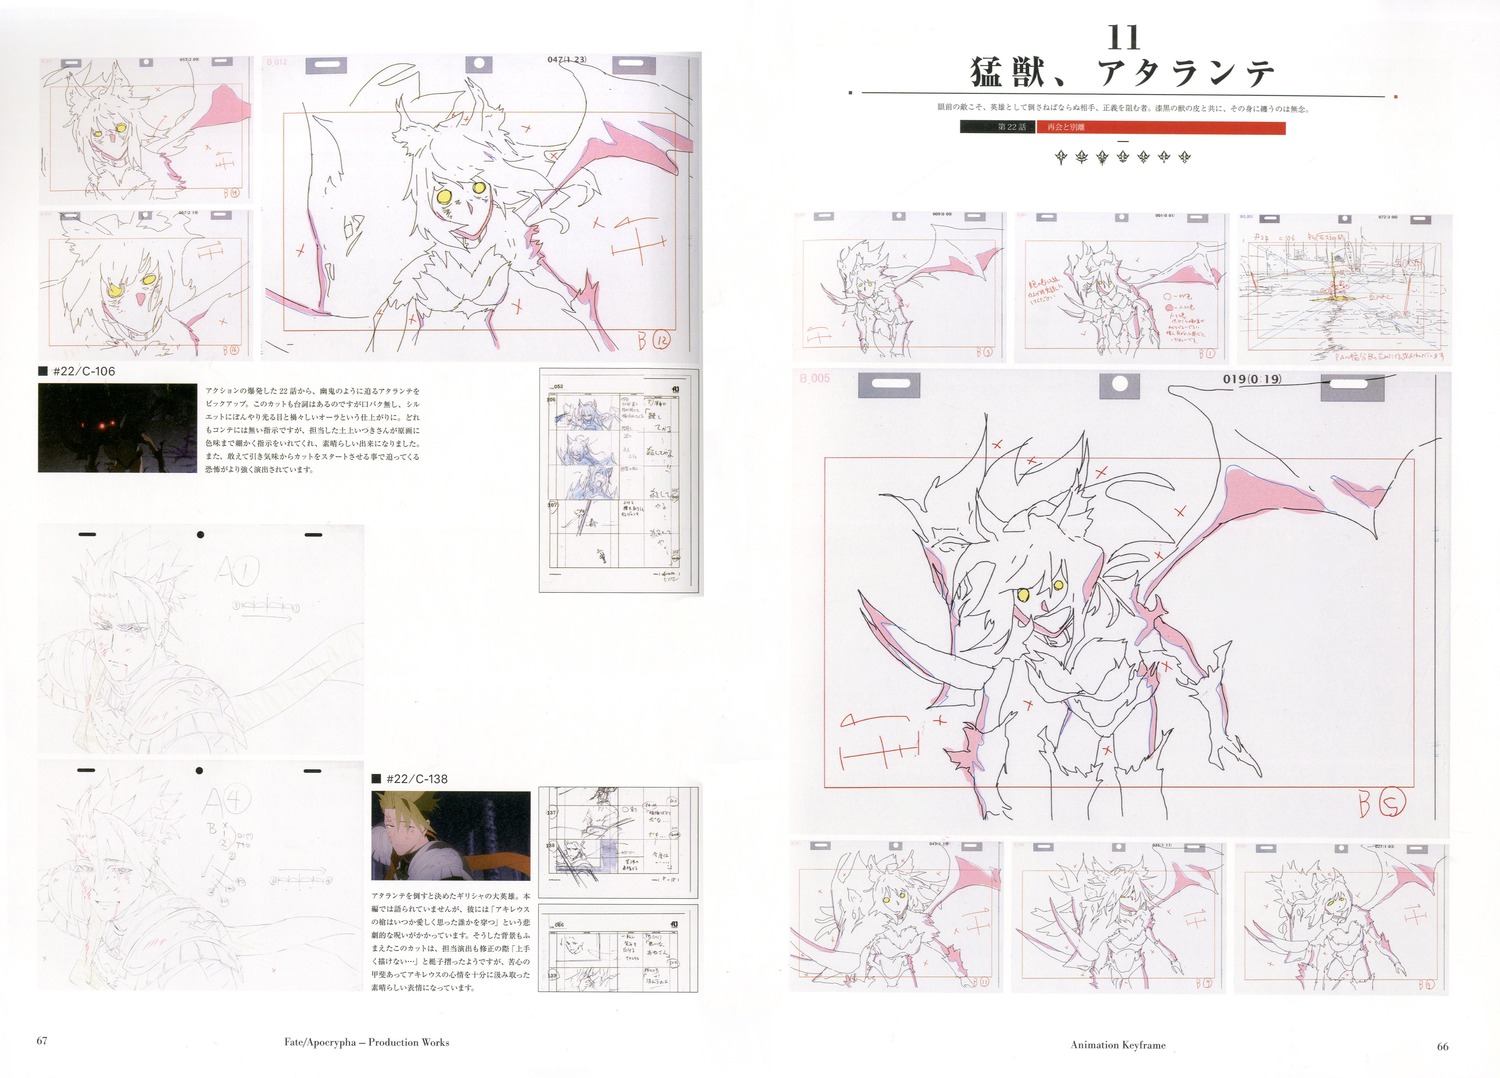 Hakuyu Go Itsuki Tsuchigami Fate Apocrypha Fate Series Genga Production Materials Storyboard Sakugabooru